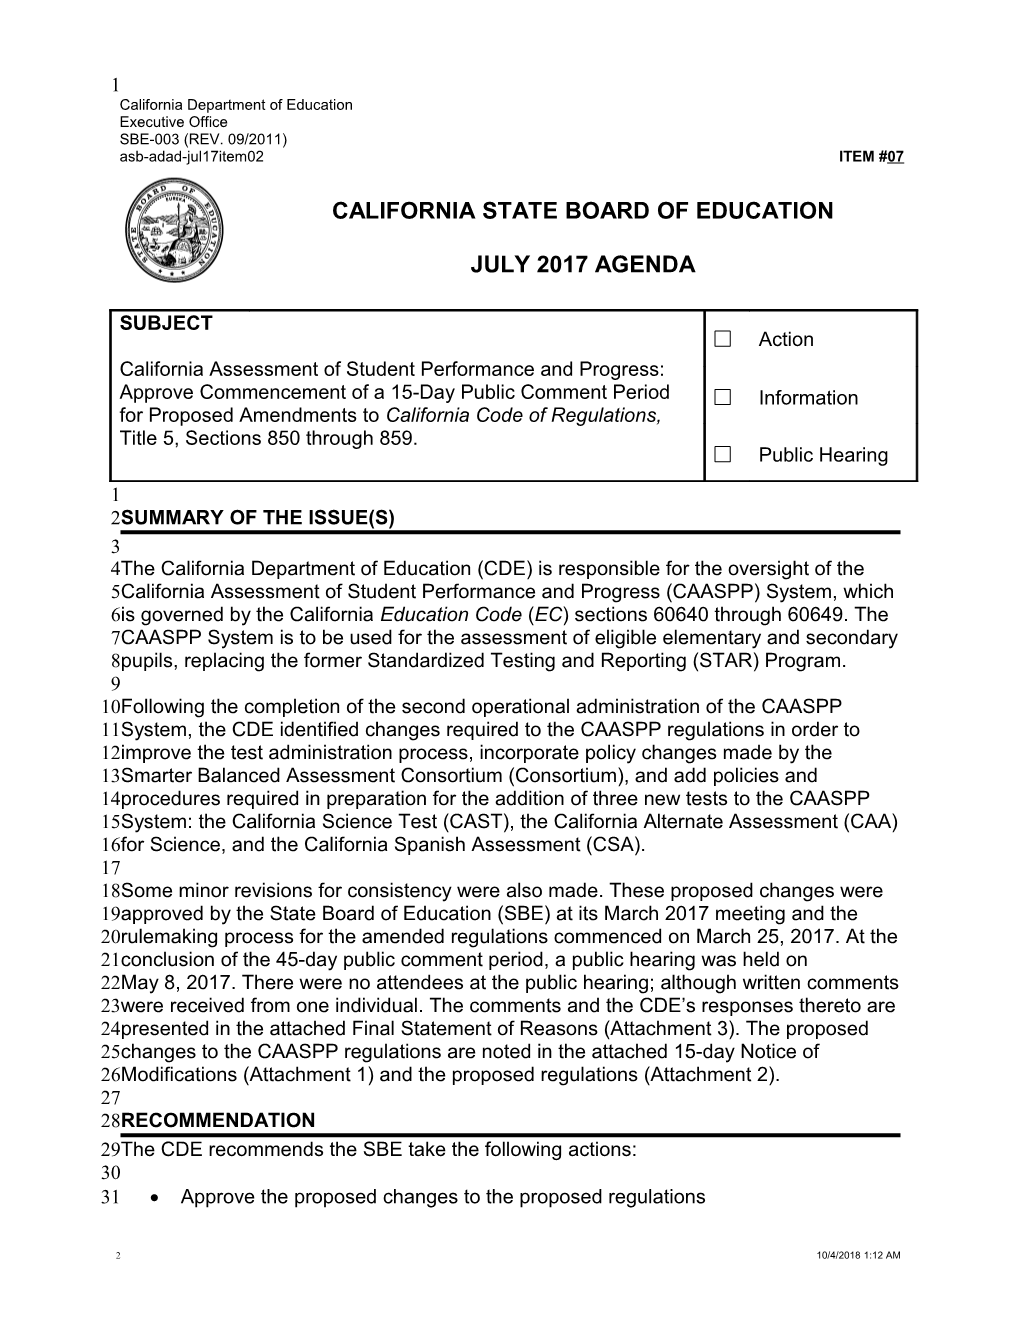 July 2017 Agenda Item 07 - Meeting Agendas (CA State Board of Education)